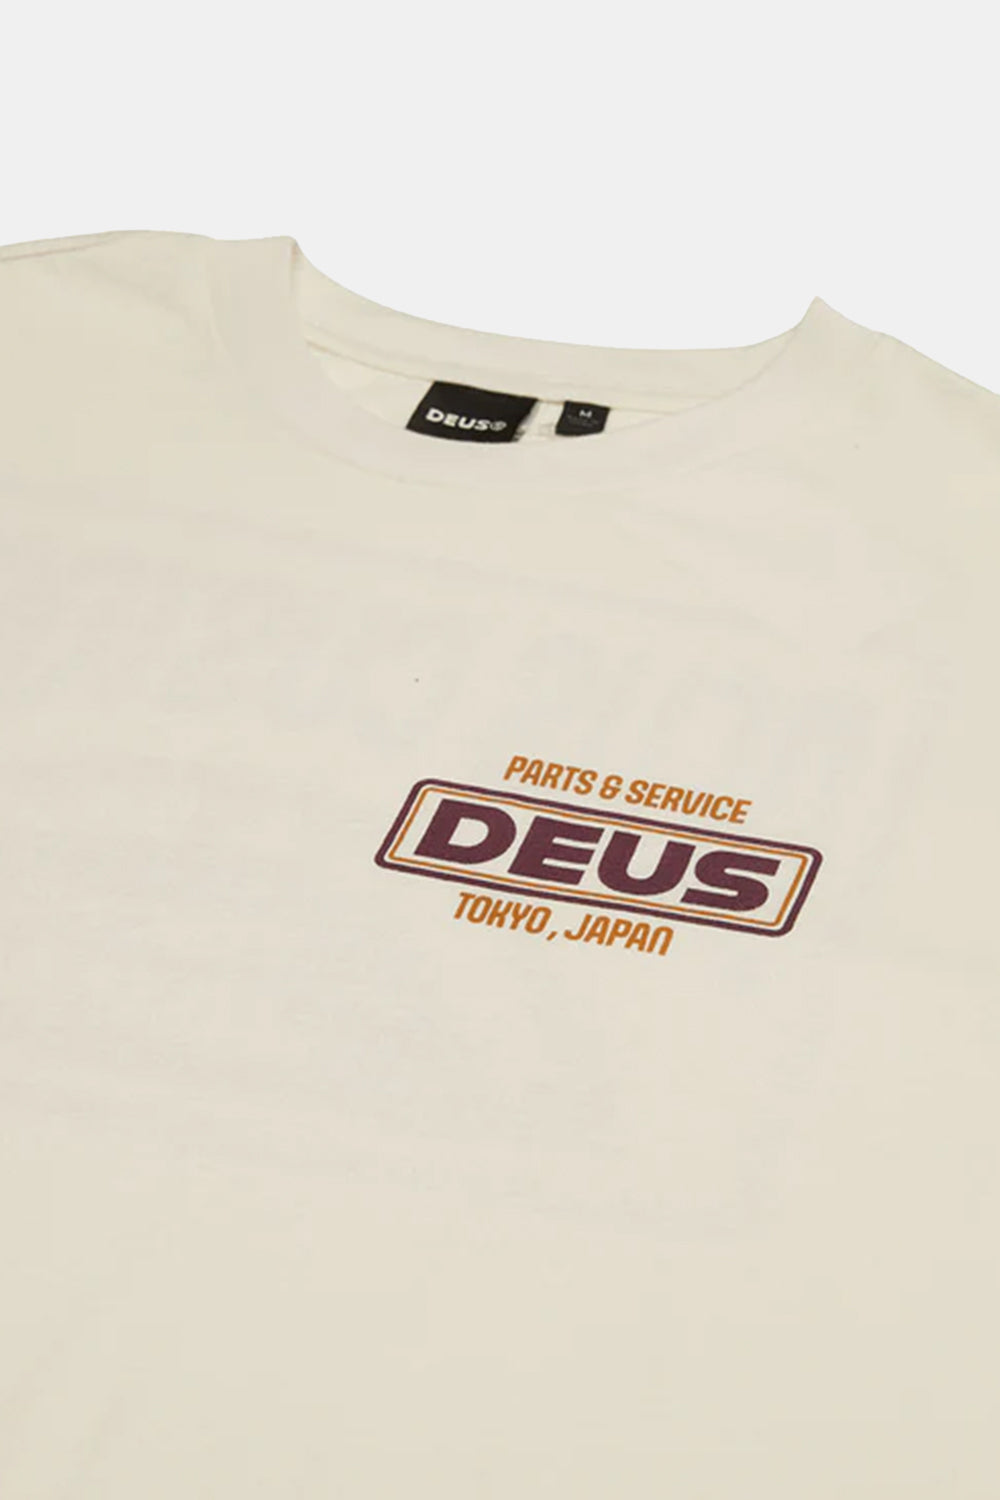 Deus Depot Organic Cotton T-shirt (Vintage White)